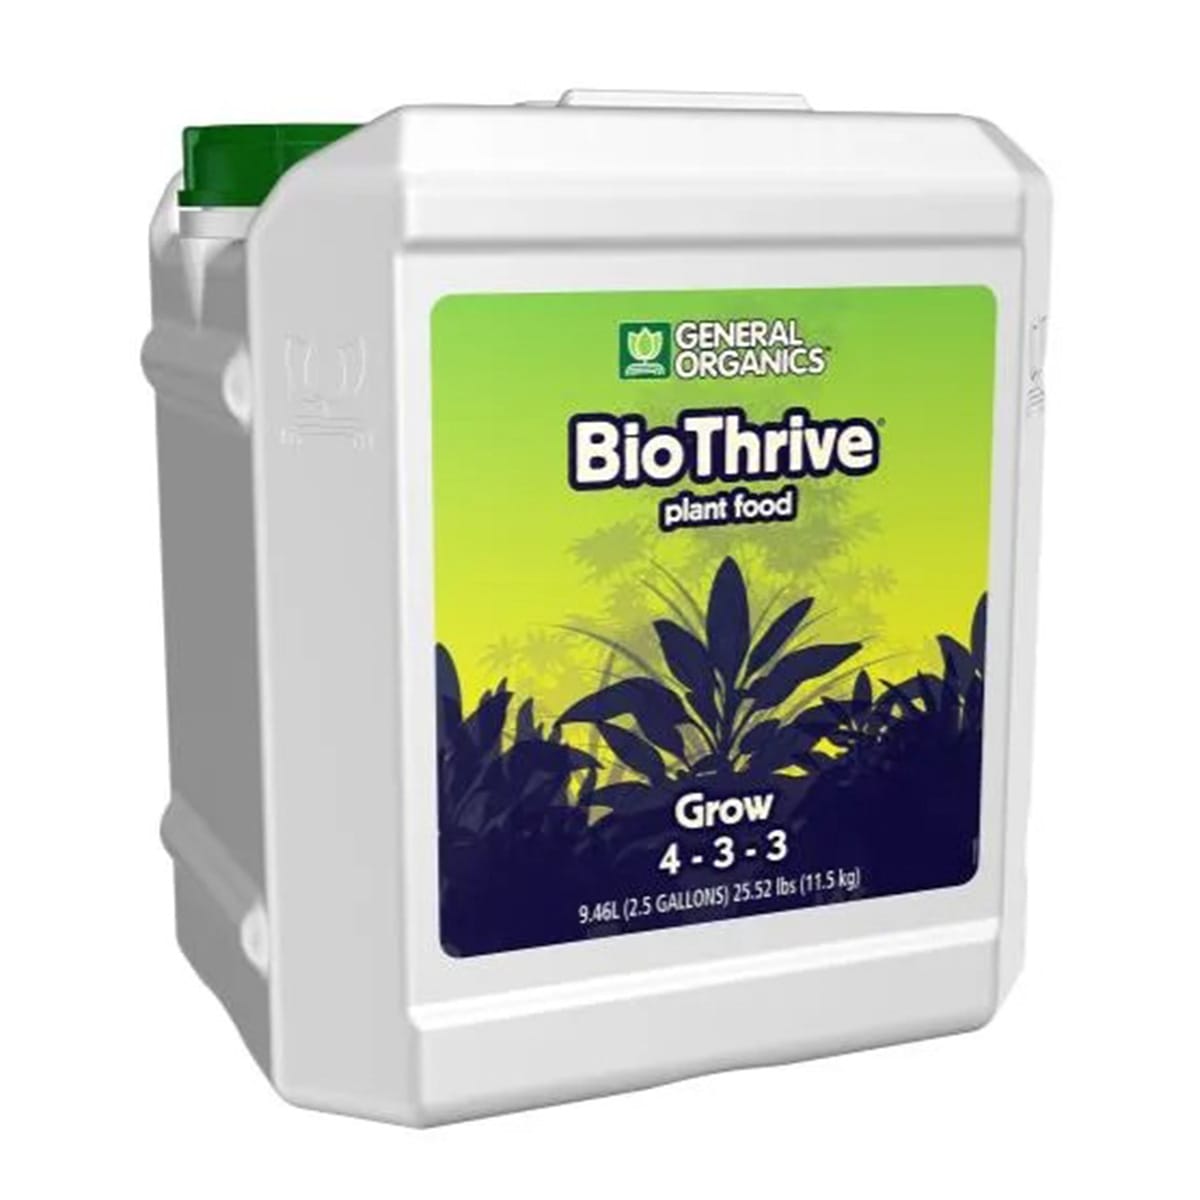 GO Biothrive Grow 2.5 gallon